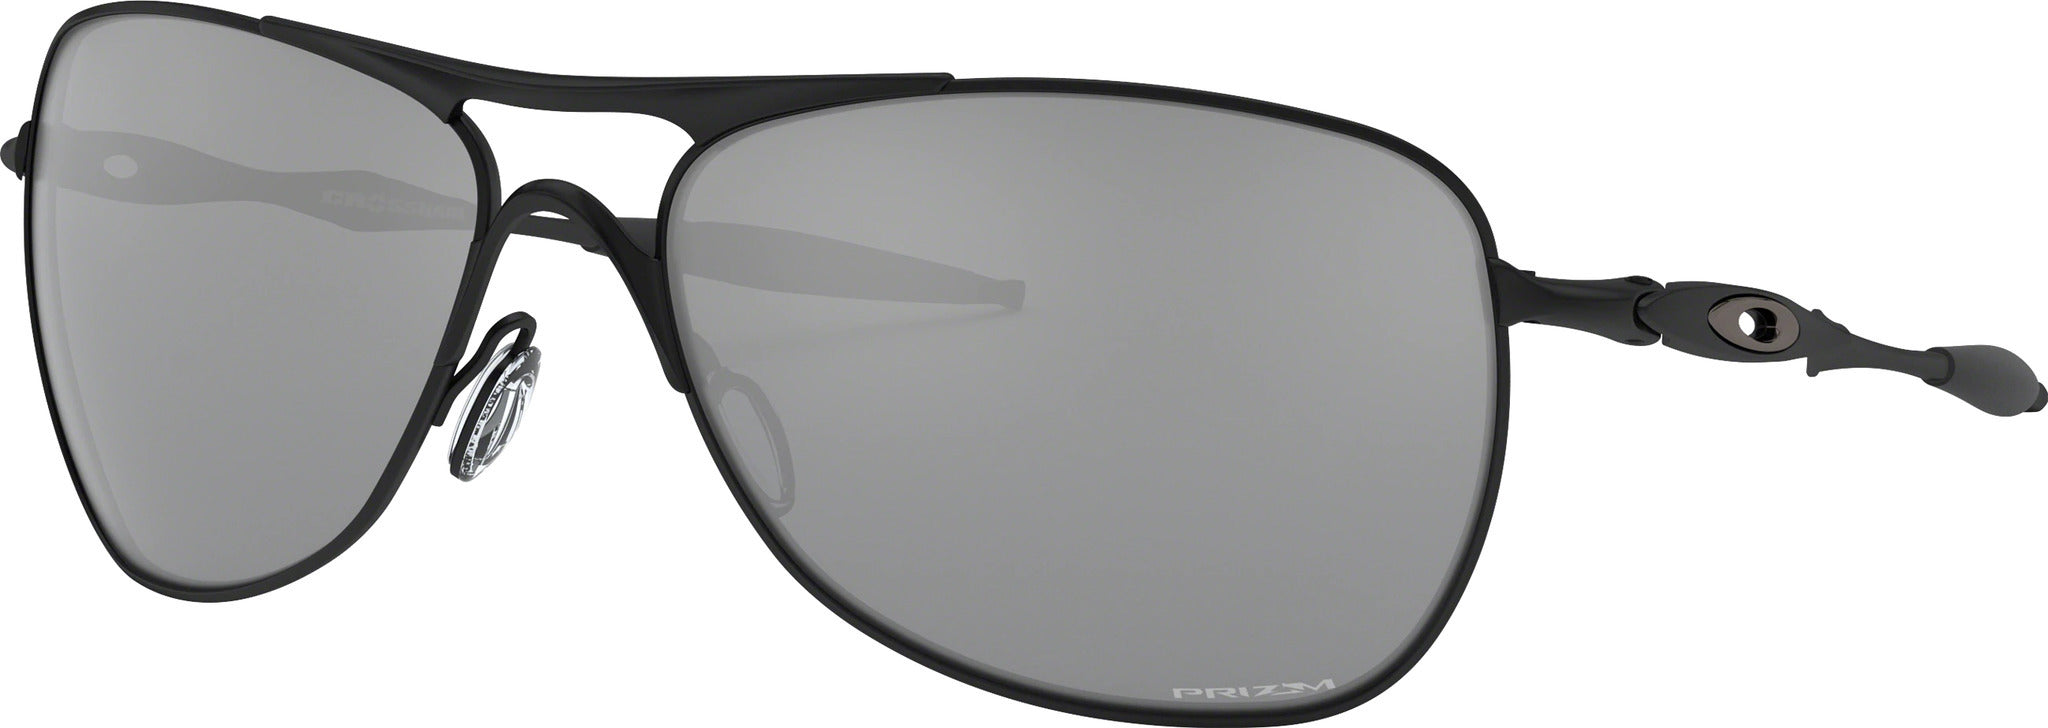 Oakley Crosshair Sunglasses - Matte Black Frame - Prizm Black Iridium Lens  - Men's | Altitude Sports